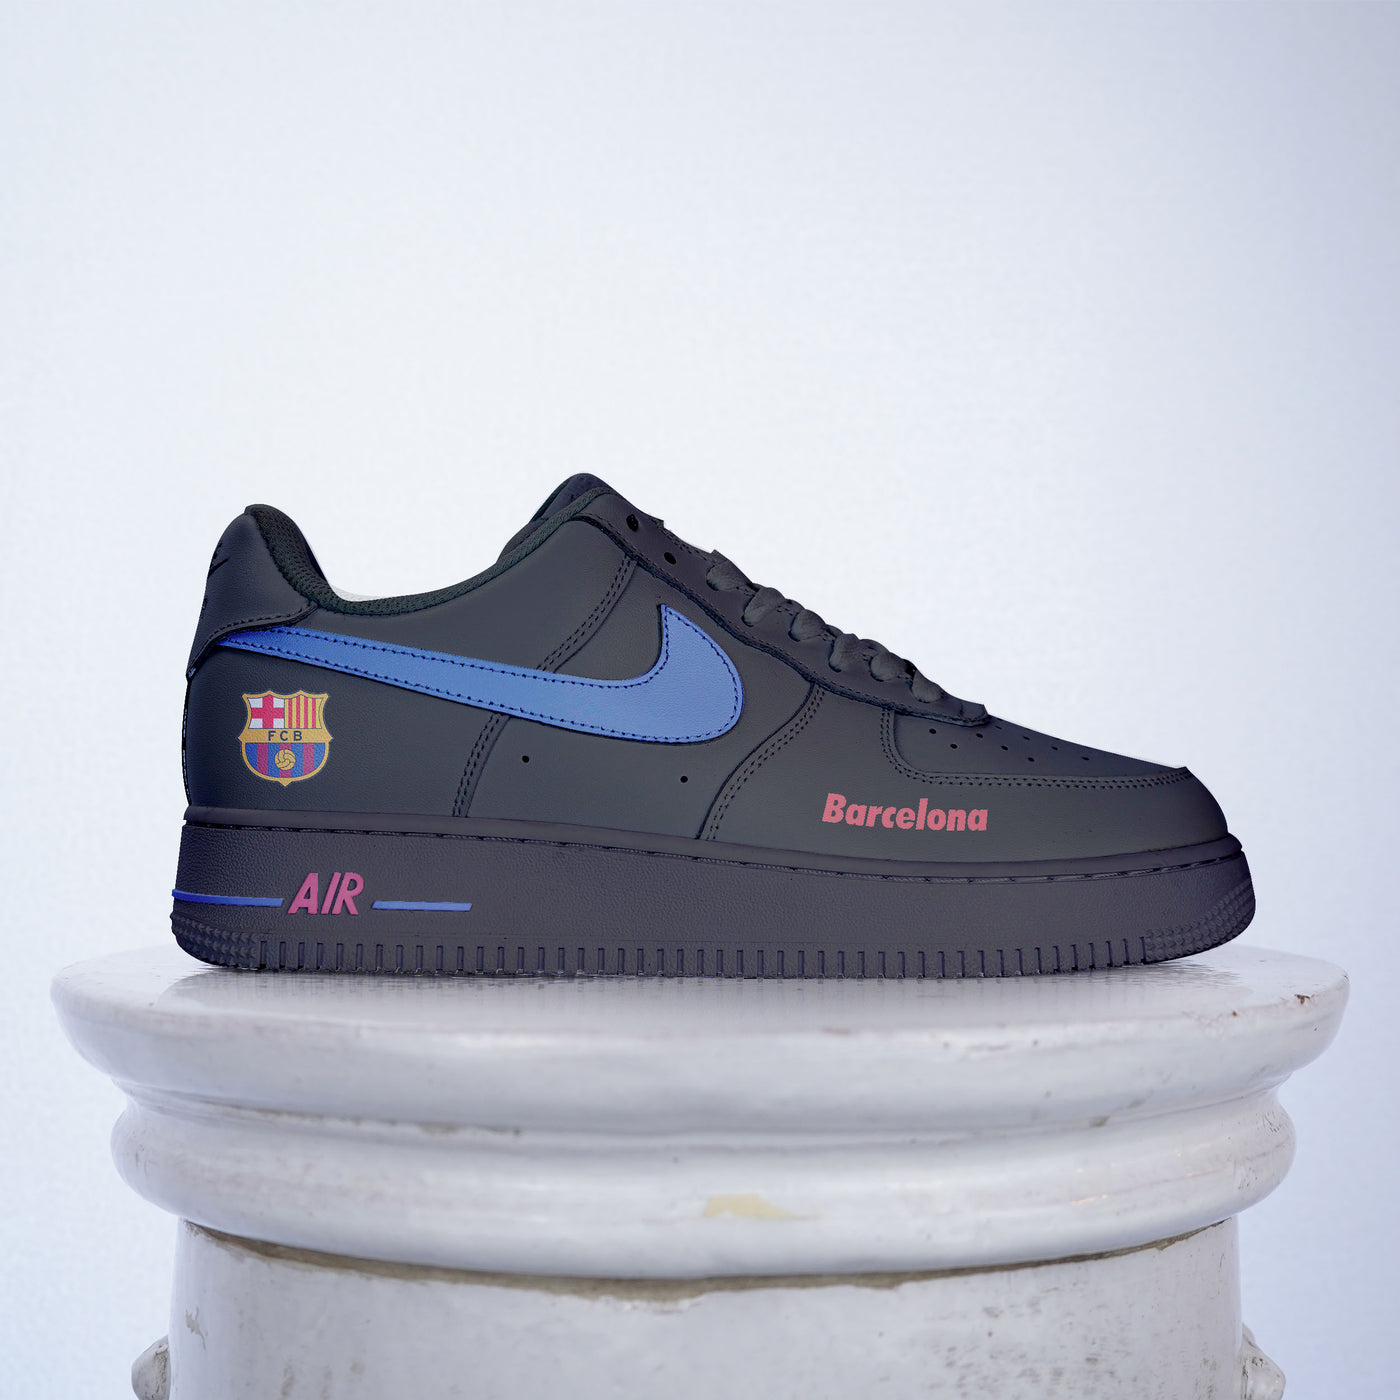 Barcelona Sneaker